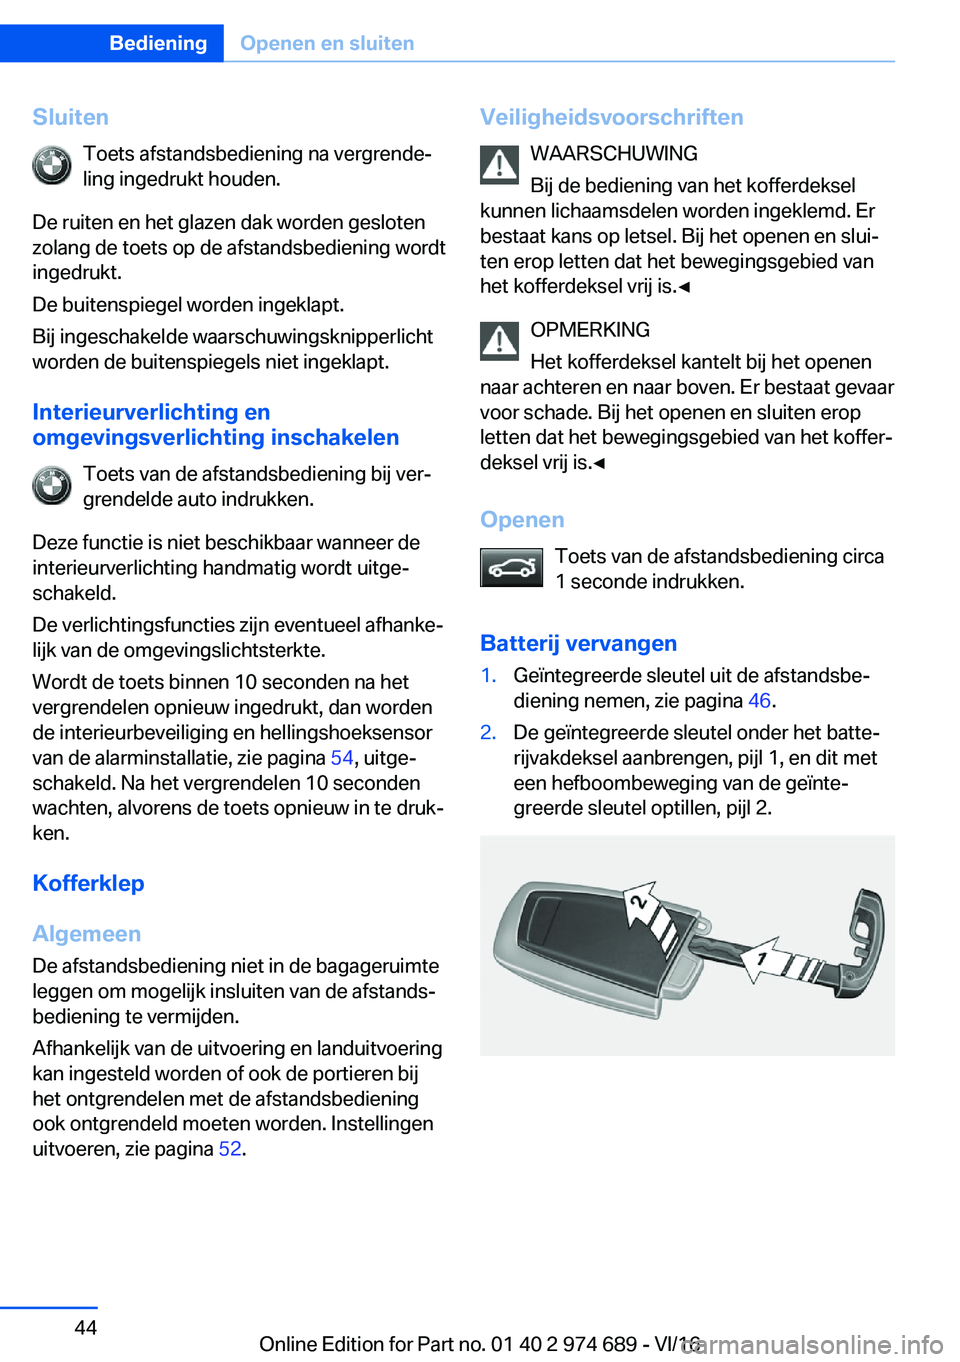 BMW M2 2017  Instructieboekjes (in Dutch) �S�l�u�i�t�e�n�T�o�e�t�s� �a�f�s�t�a�n�d�s�b�e�d�i�e�n�i�n�g� �n�a� �v�e�r�g�r�e�n�d�ej�l�i�n�g� �i�n�g�e�d�r�u�k�t� �h�o�u�d�e�n�.
�D�e� �r�u�i�t�e�n� �e�n� �h�e�t� �g�l�a�z�e�n� �d�a�k� �w�o�r�d�e�